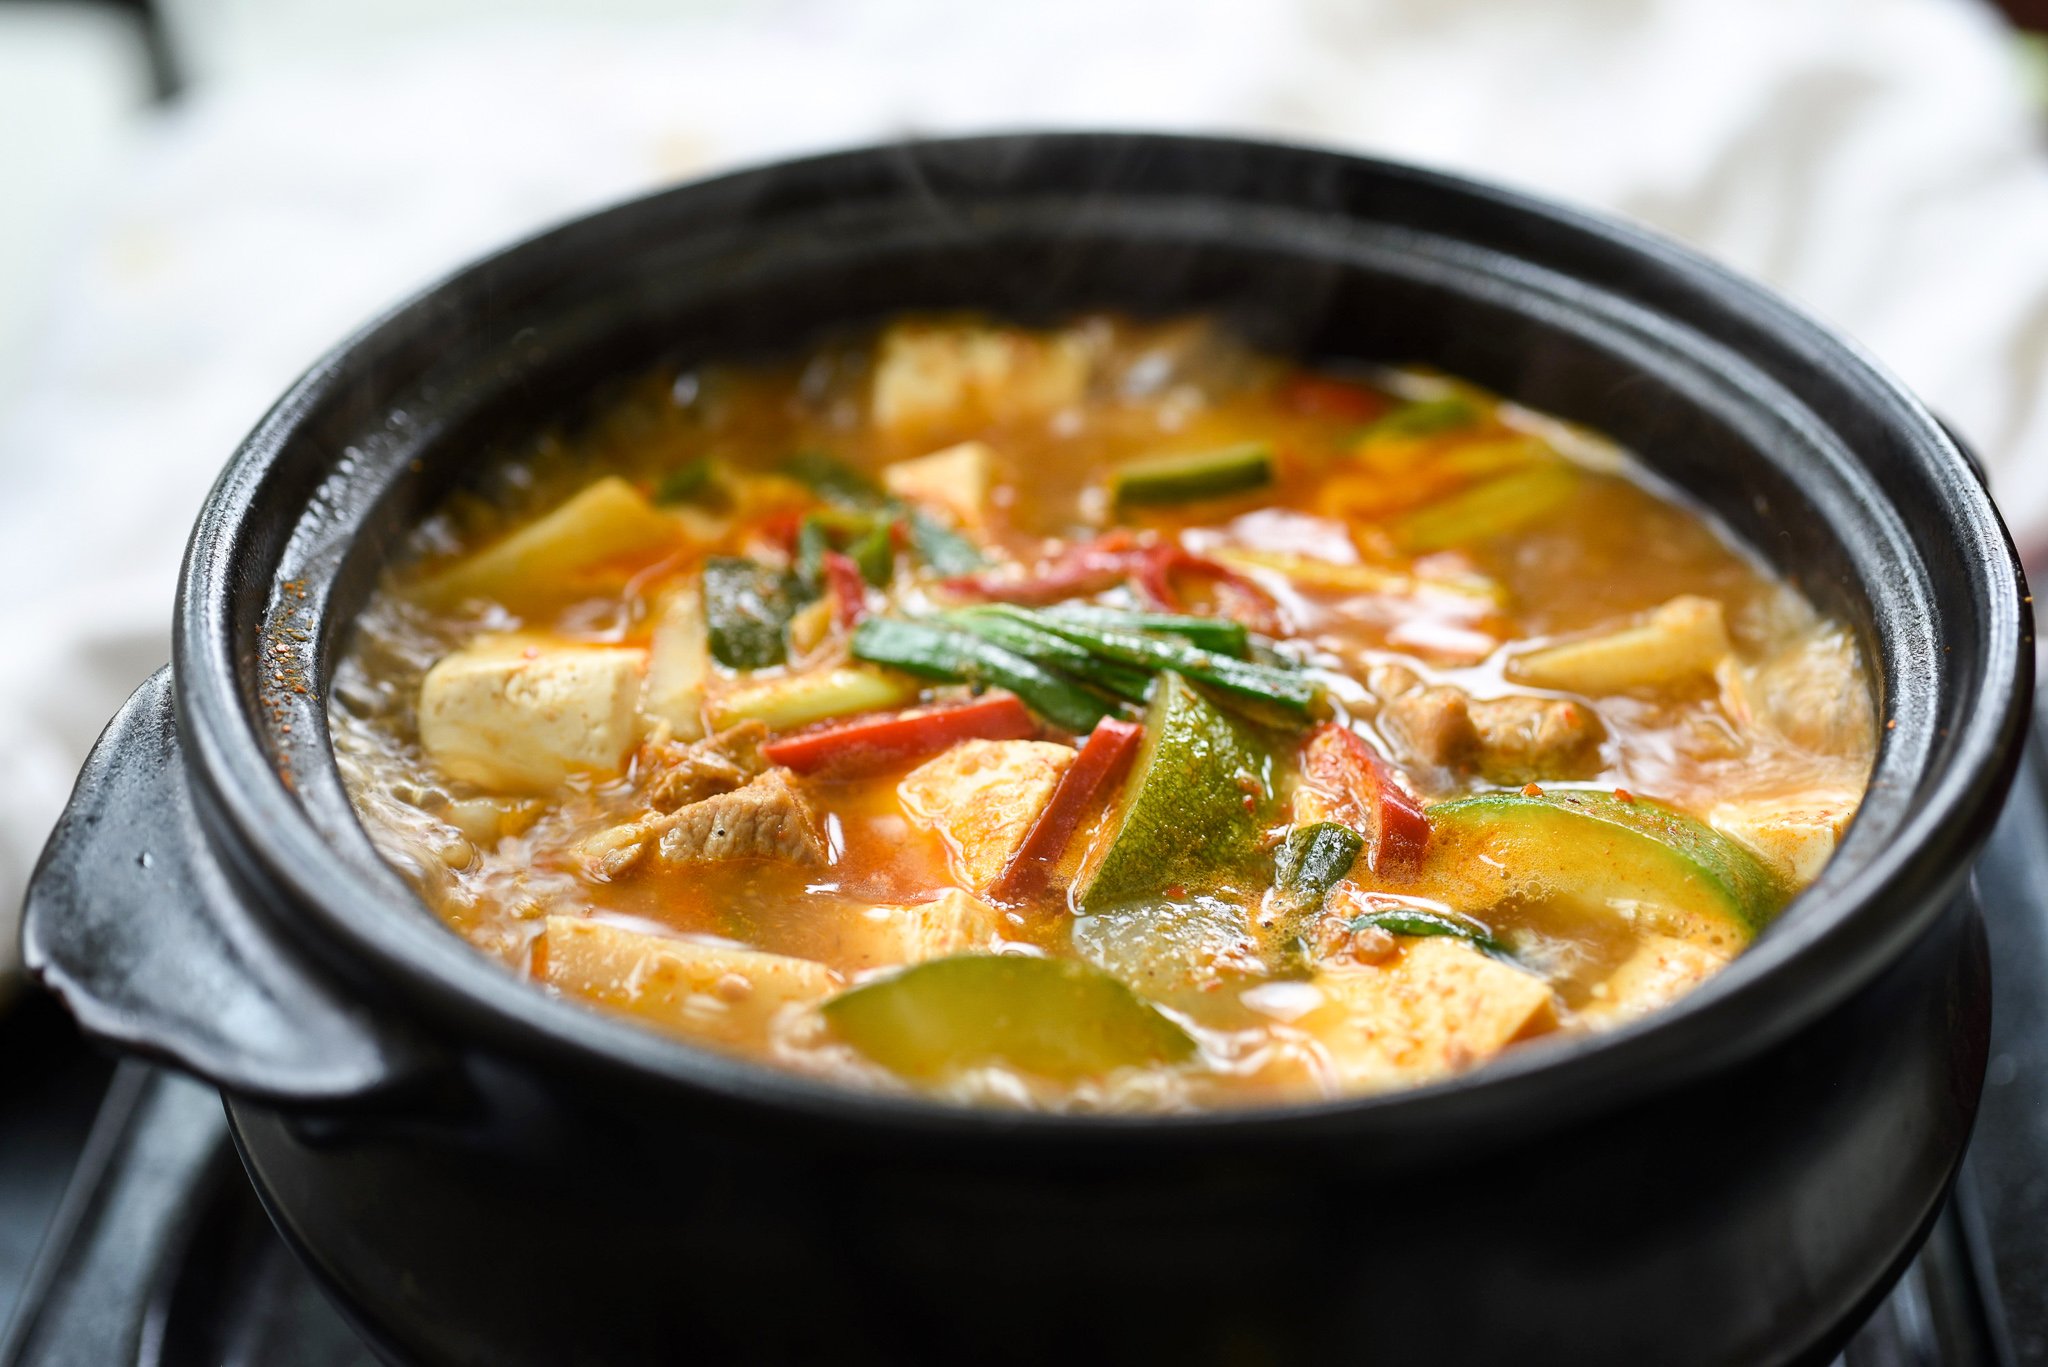 DSC 0672 - Doenjang Jjigae (Soybean Paste Stew with Pork and Vegetables)